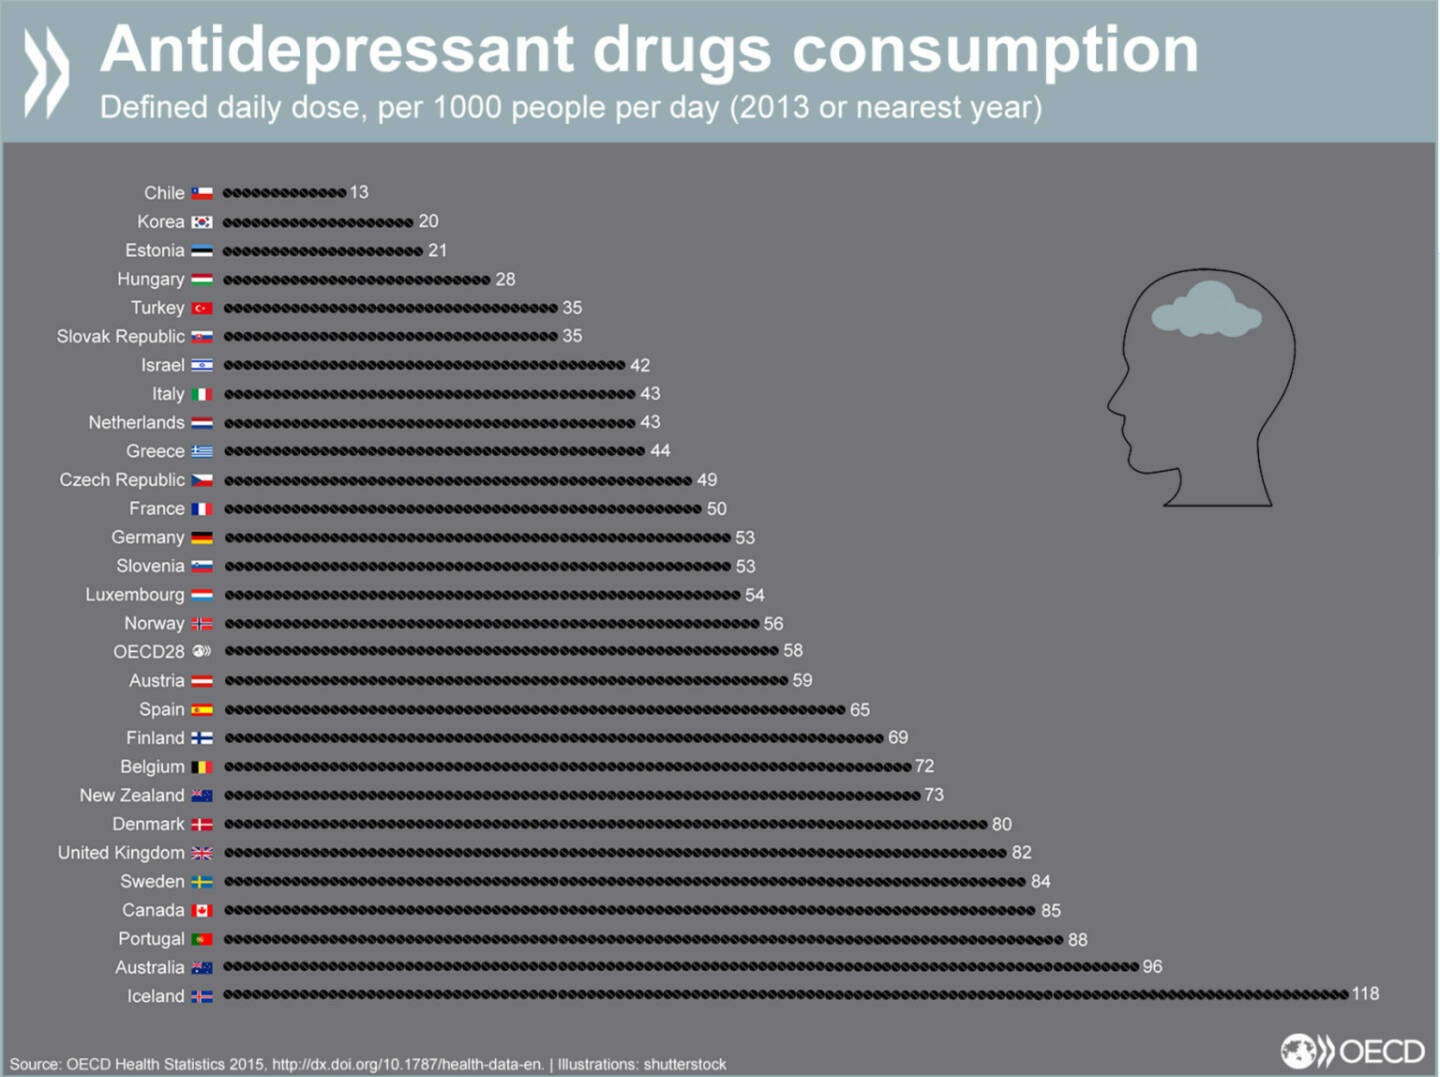 Konsum von Antidepressiva in OECD-Ländern http://bit.ly/1lr5KBV